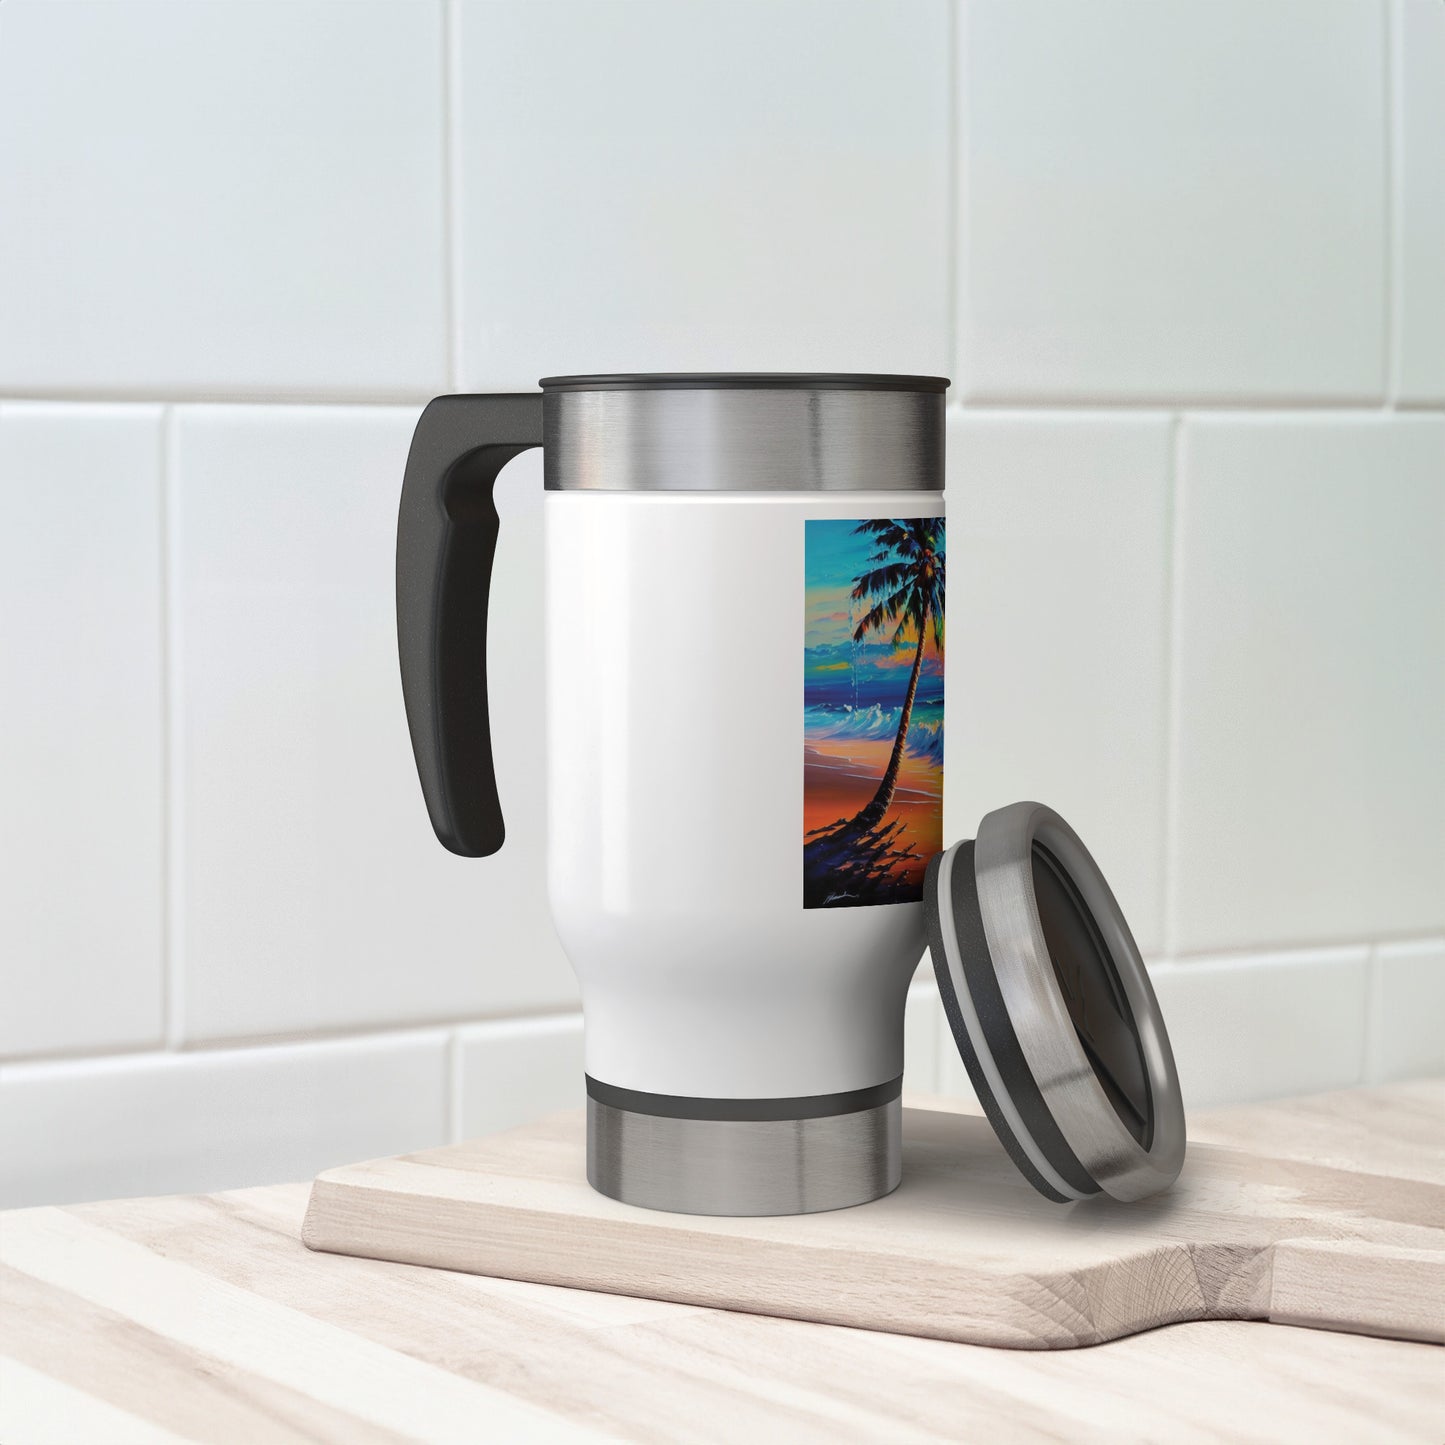 Tropical Island Beach - 14oz Travel Mug #1